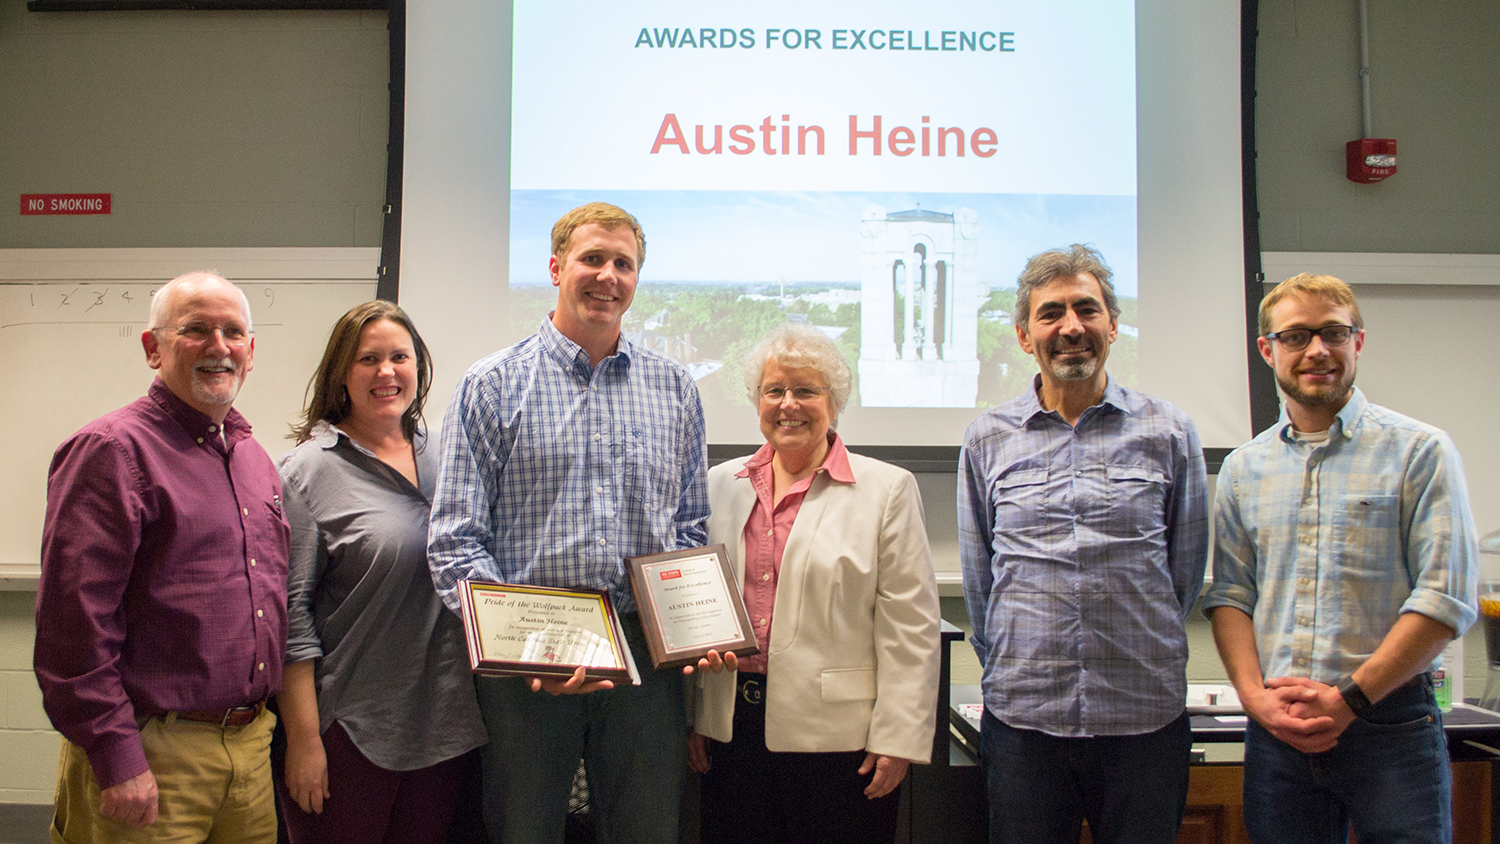 Austin Heine Awards for Excellence presentation